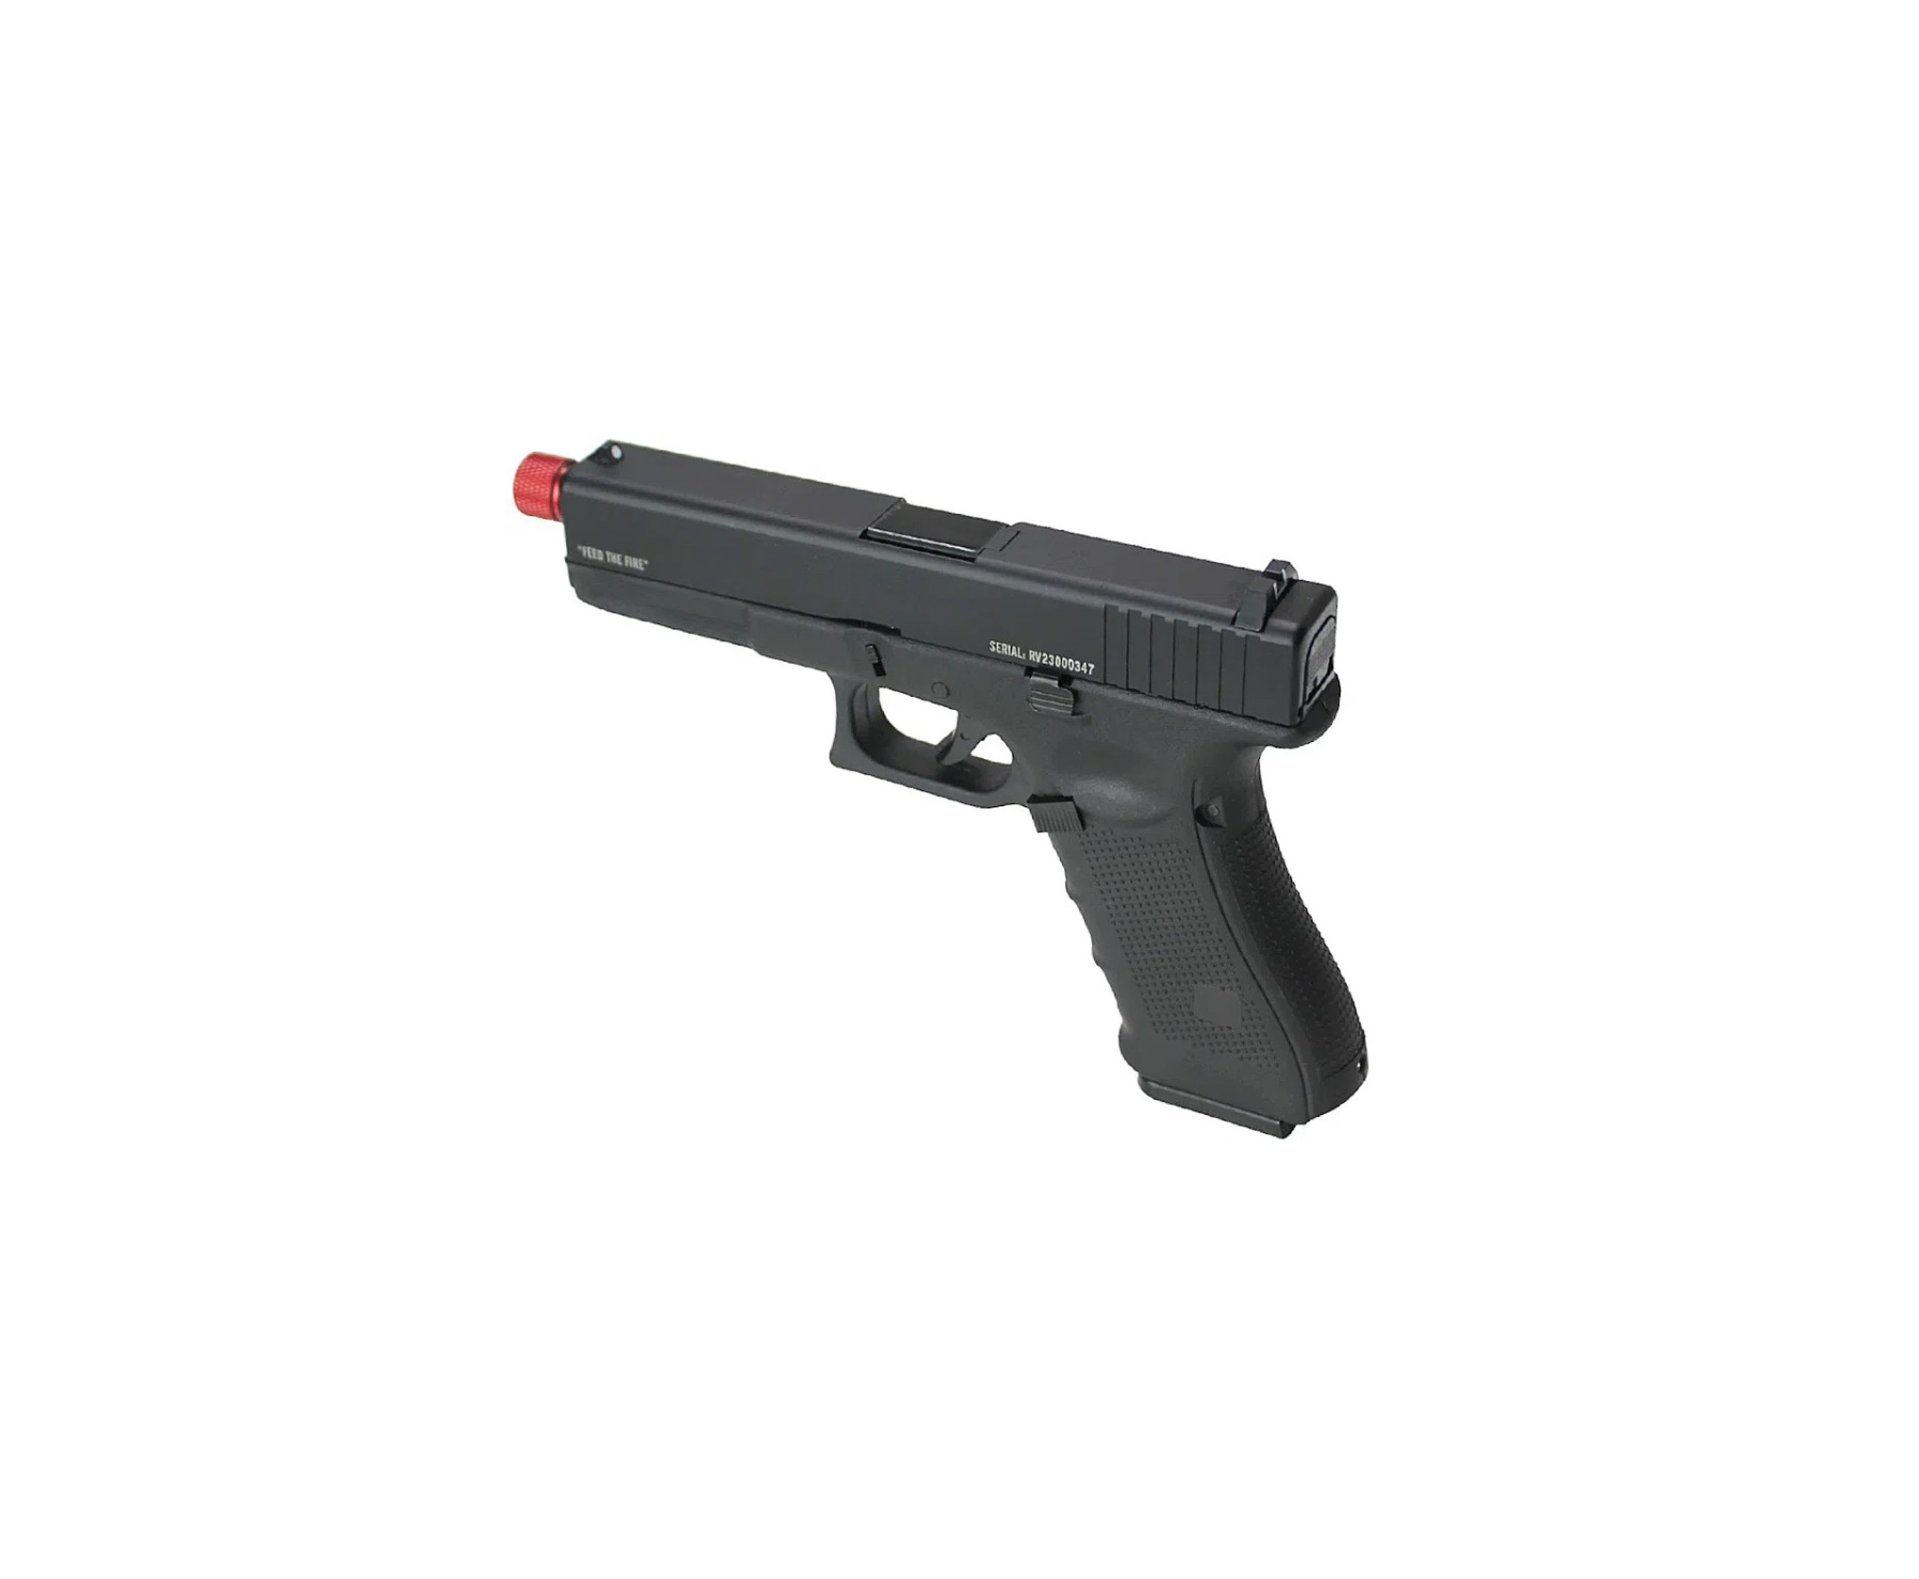 Pistola de Airsoft GBB Glock G17 Raven Full Metal Green Gas 6mm - TAG + Green Gas + BB’S + Óleo de Silicone + Alvos